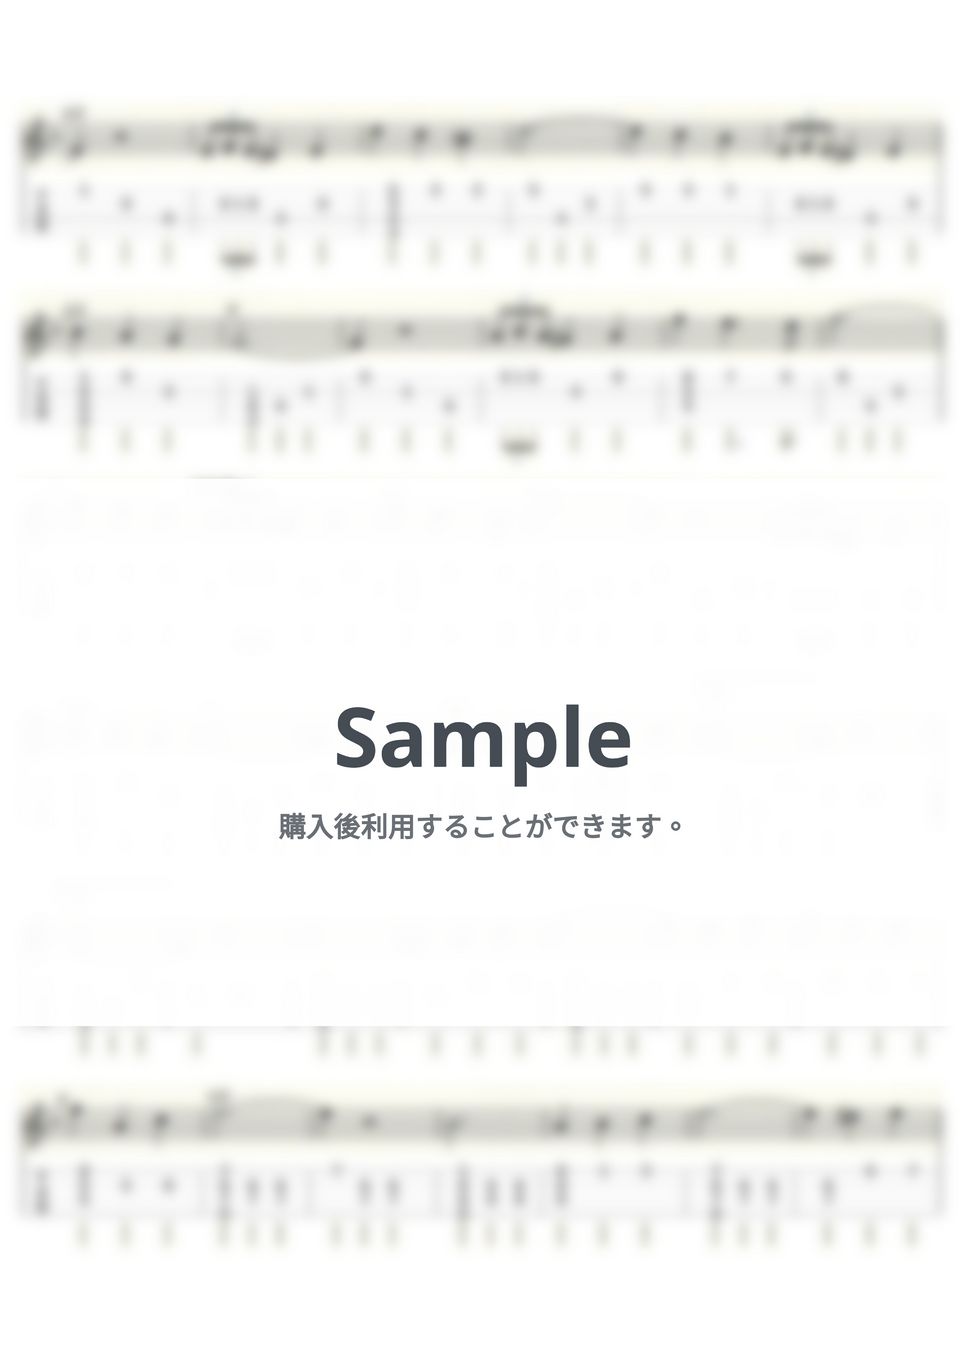 J.ローザス - 波濤をこえて (ｳｸﾚﾚｿﾛ / High-G・Low-G / 初級～中級) by ukulelepapa